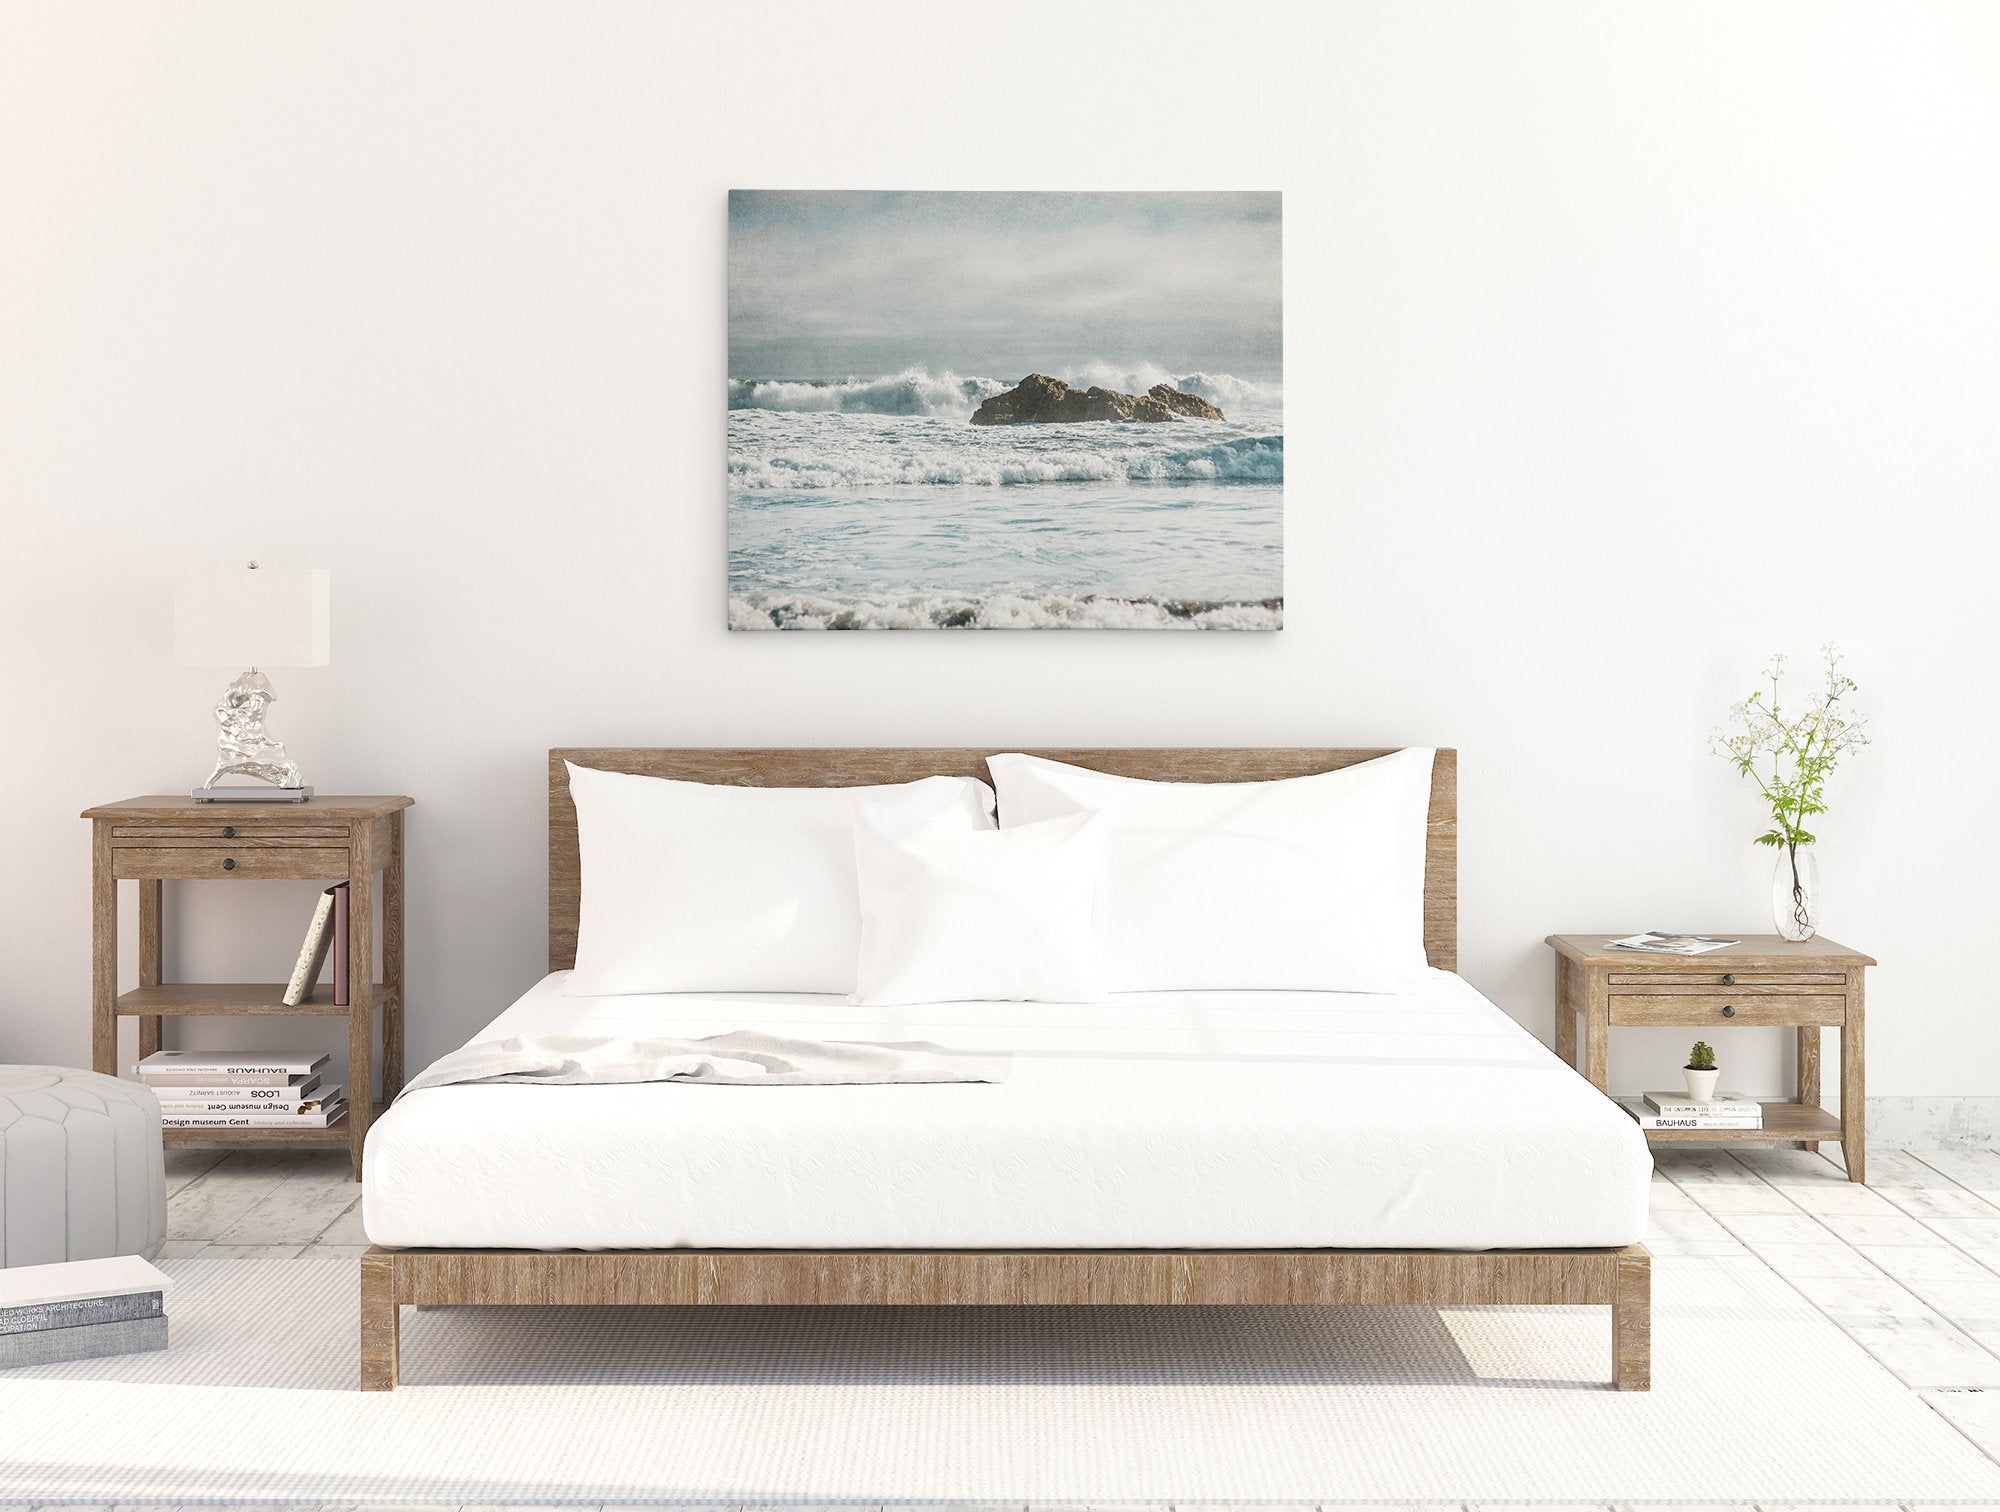 Bedroom canvas wall art featuring a coastal scene of waves breaking over rocks